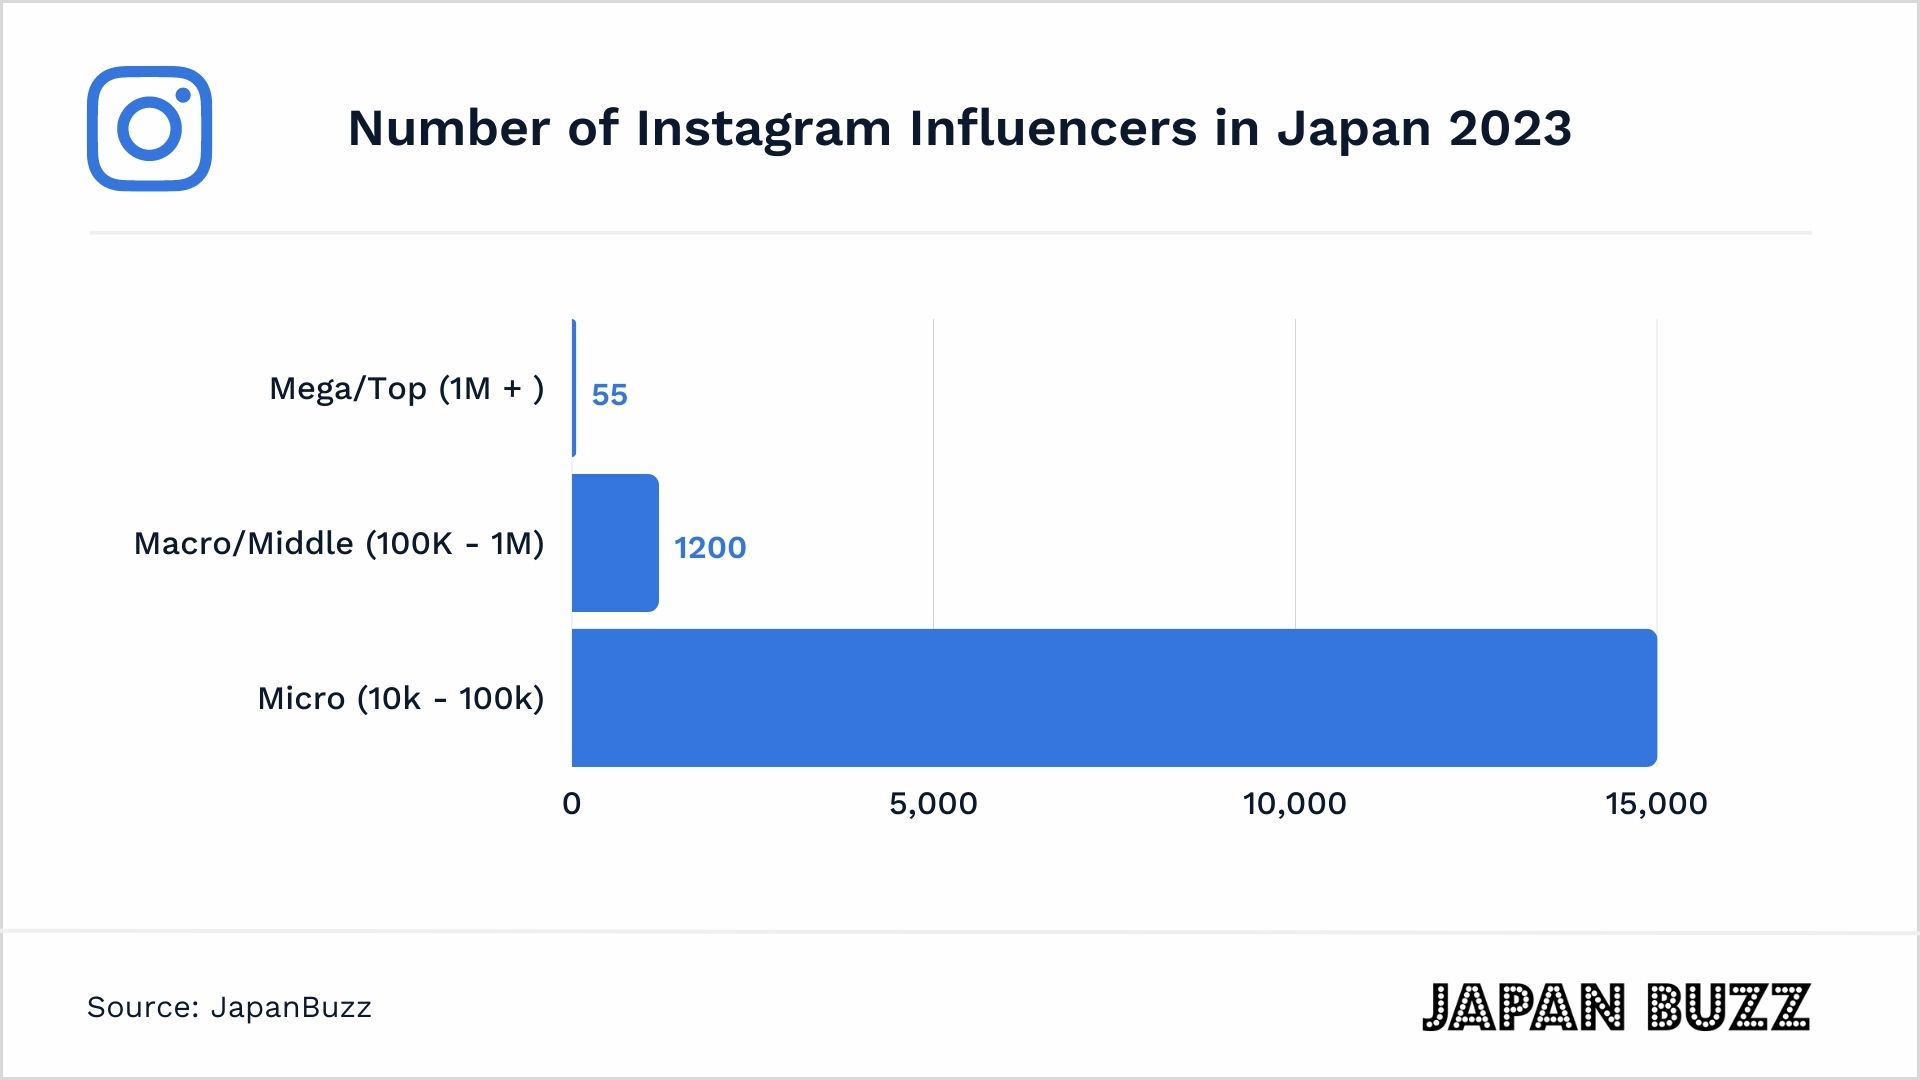 Number of Instagram Influencers on Instagram in Japan 2023